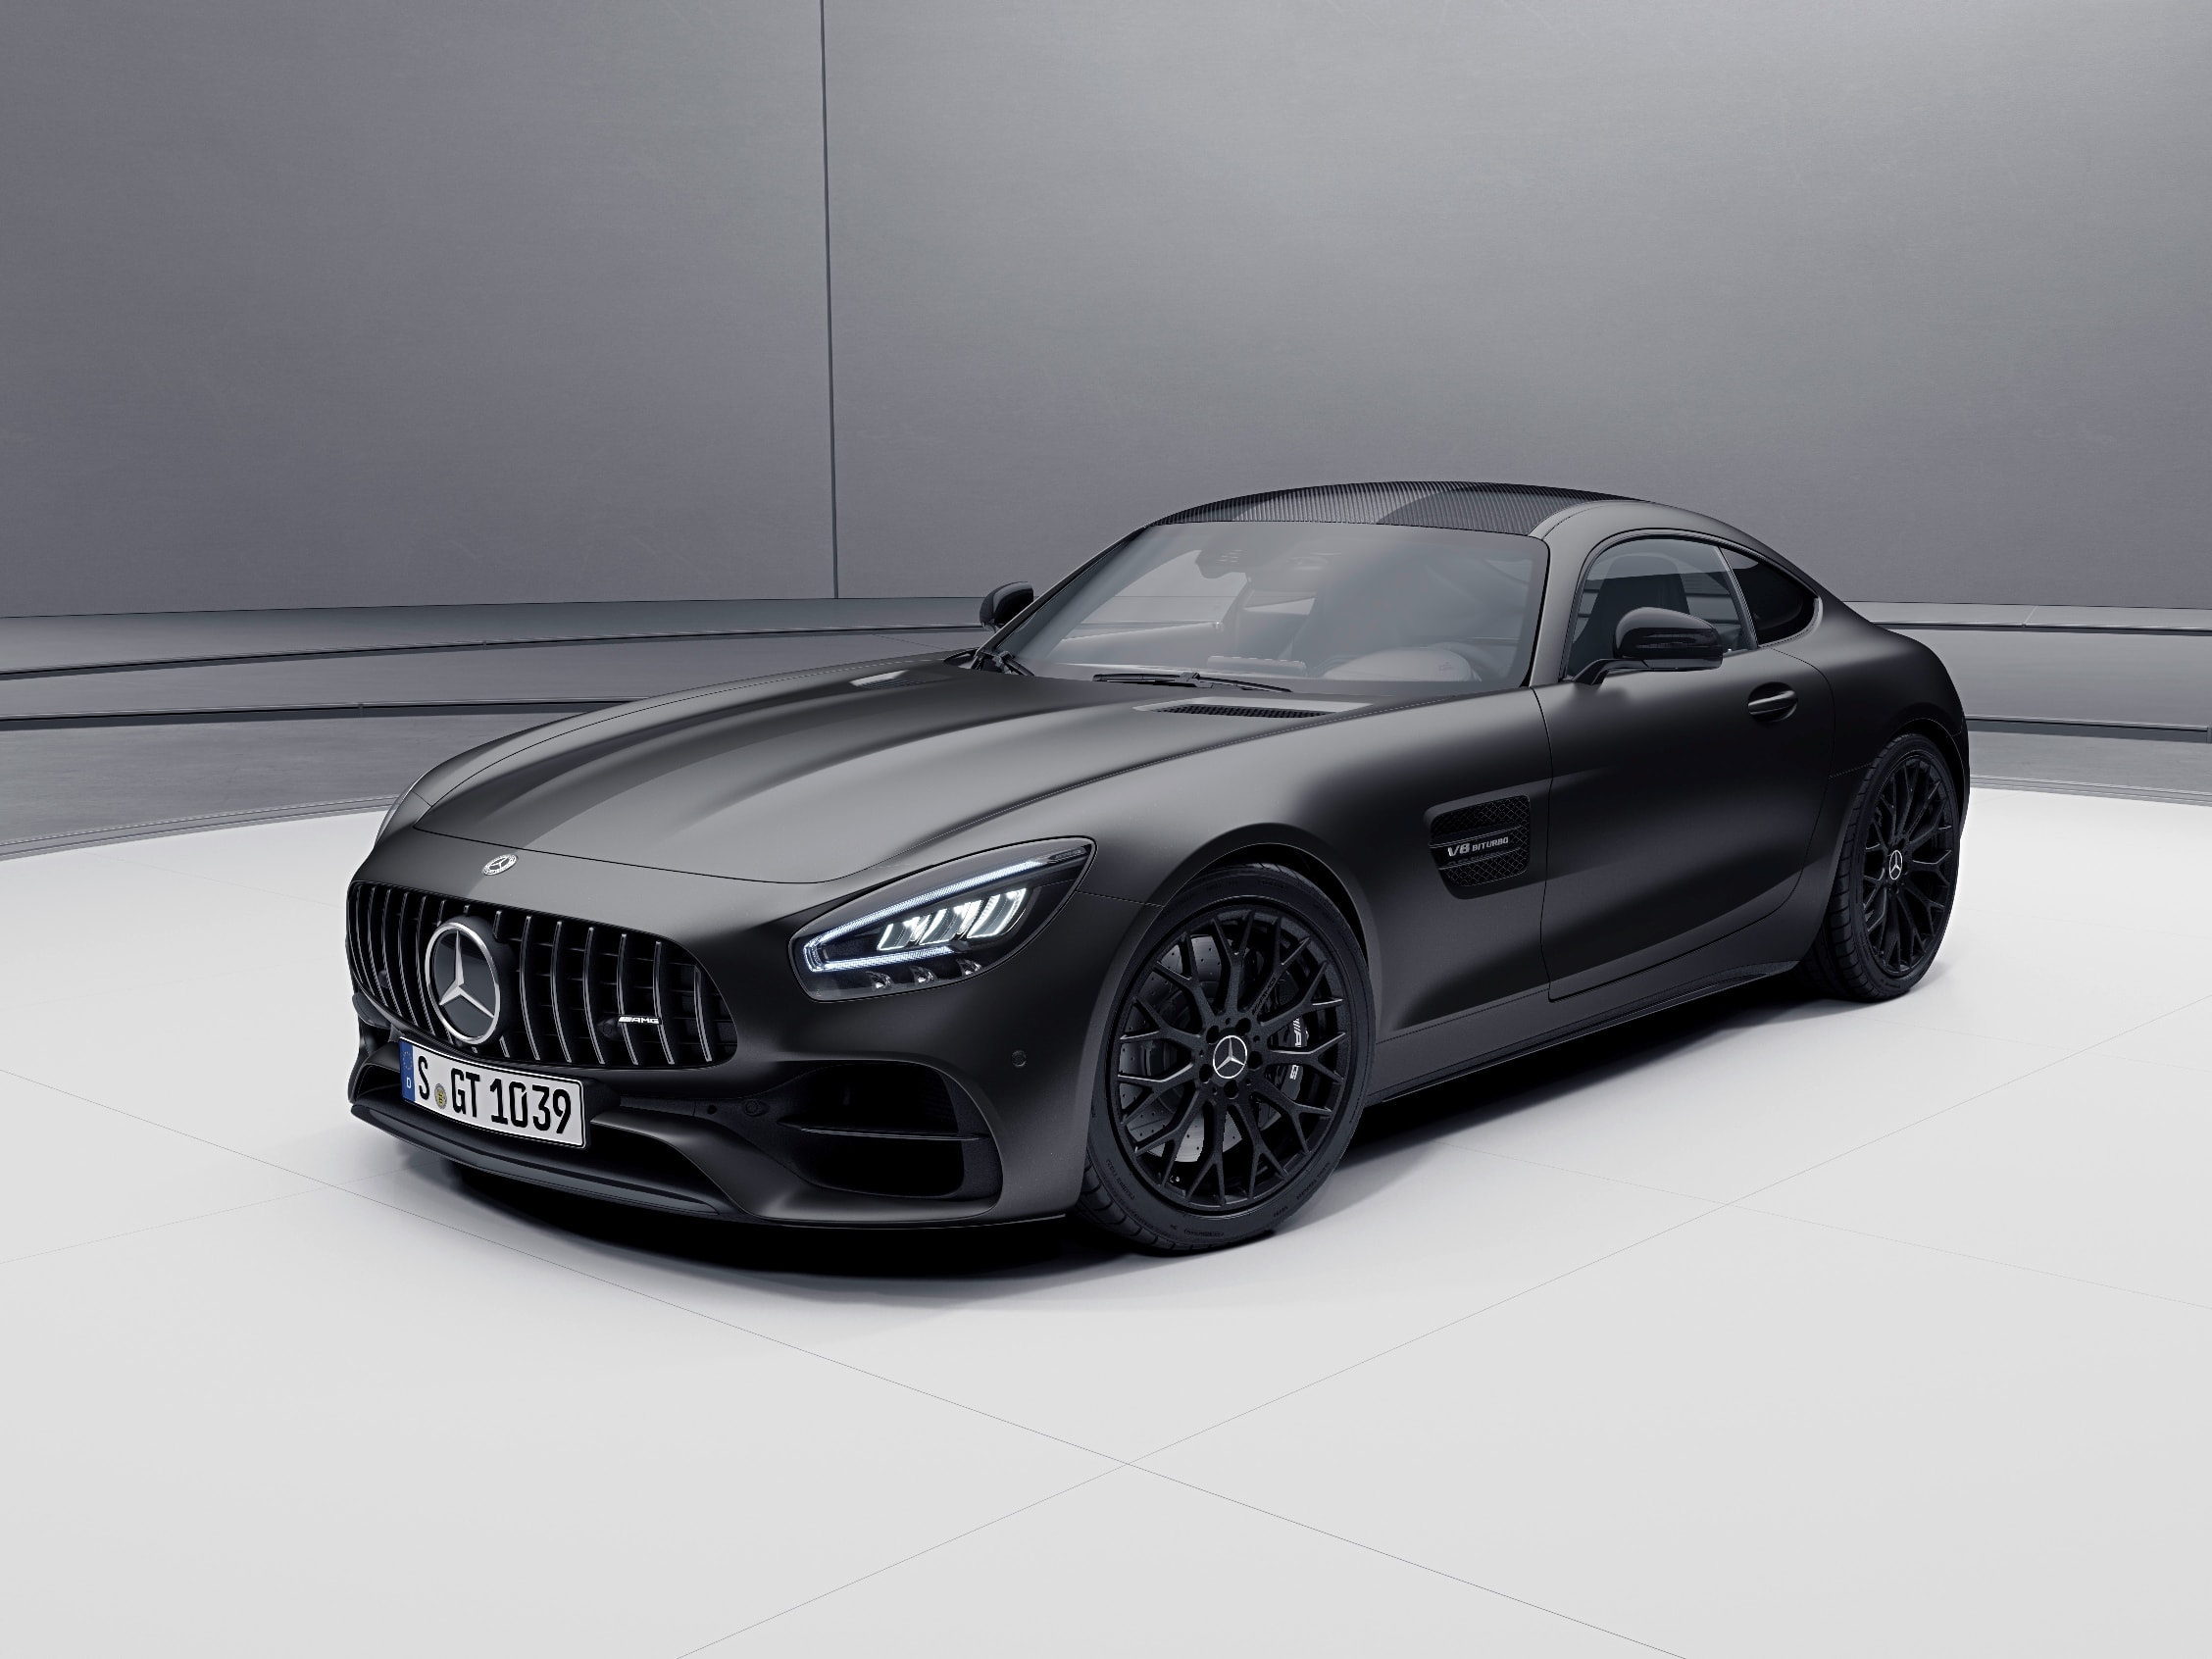 2021 MercedesAMG GT “Stealth Edition” Rocks Black Design Elements